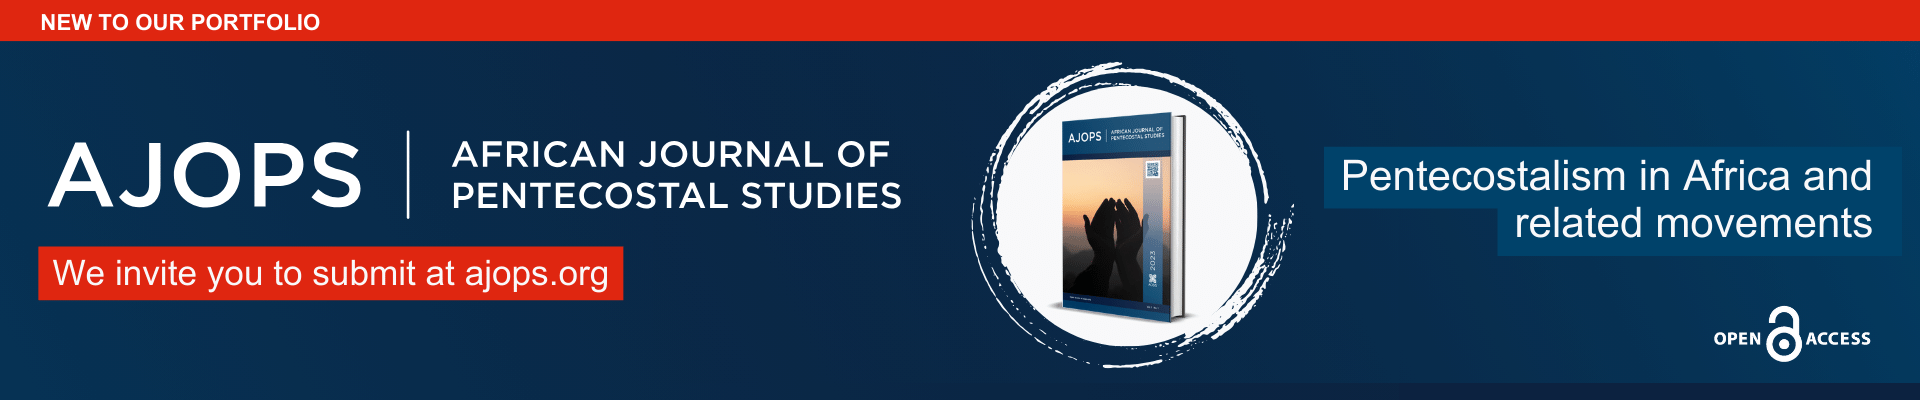 African Journal of Pentecostal Studies